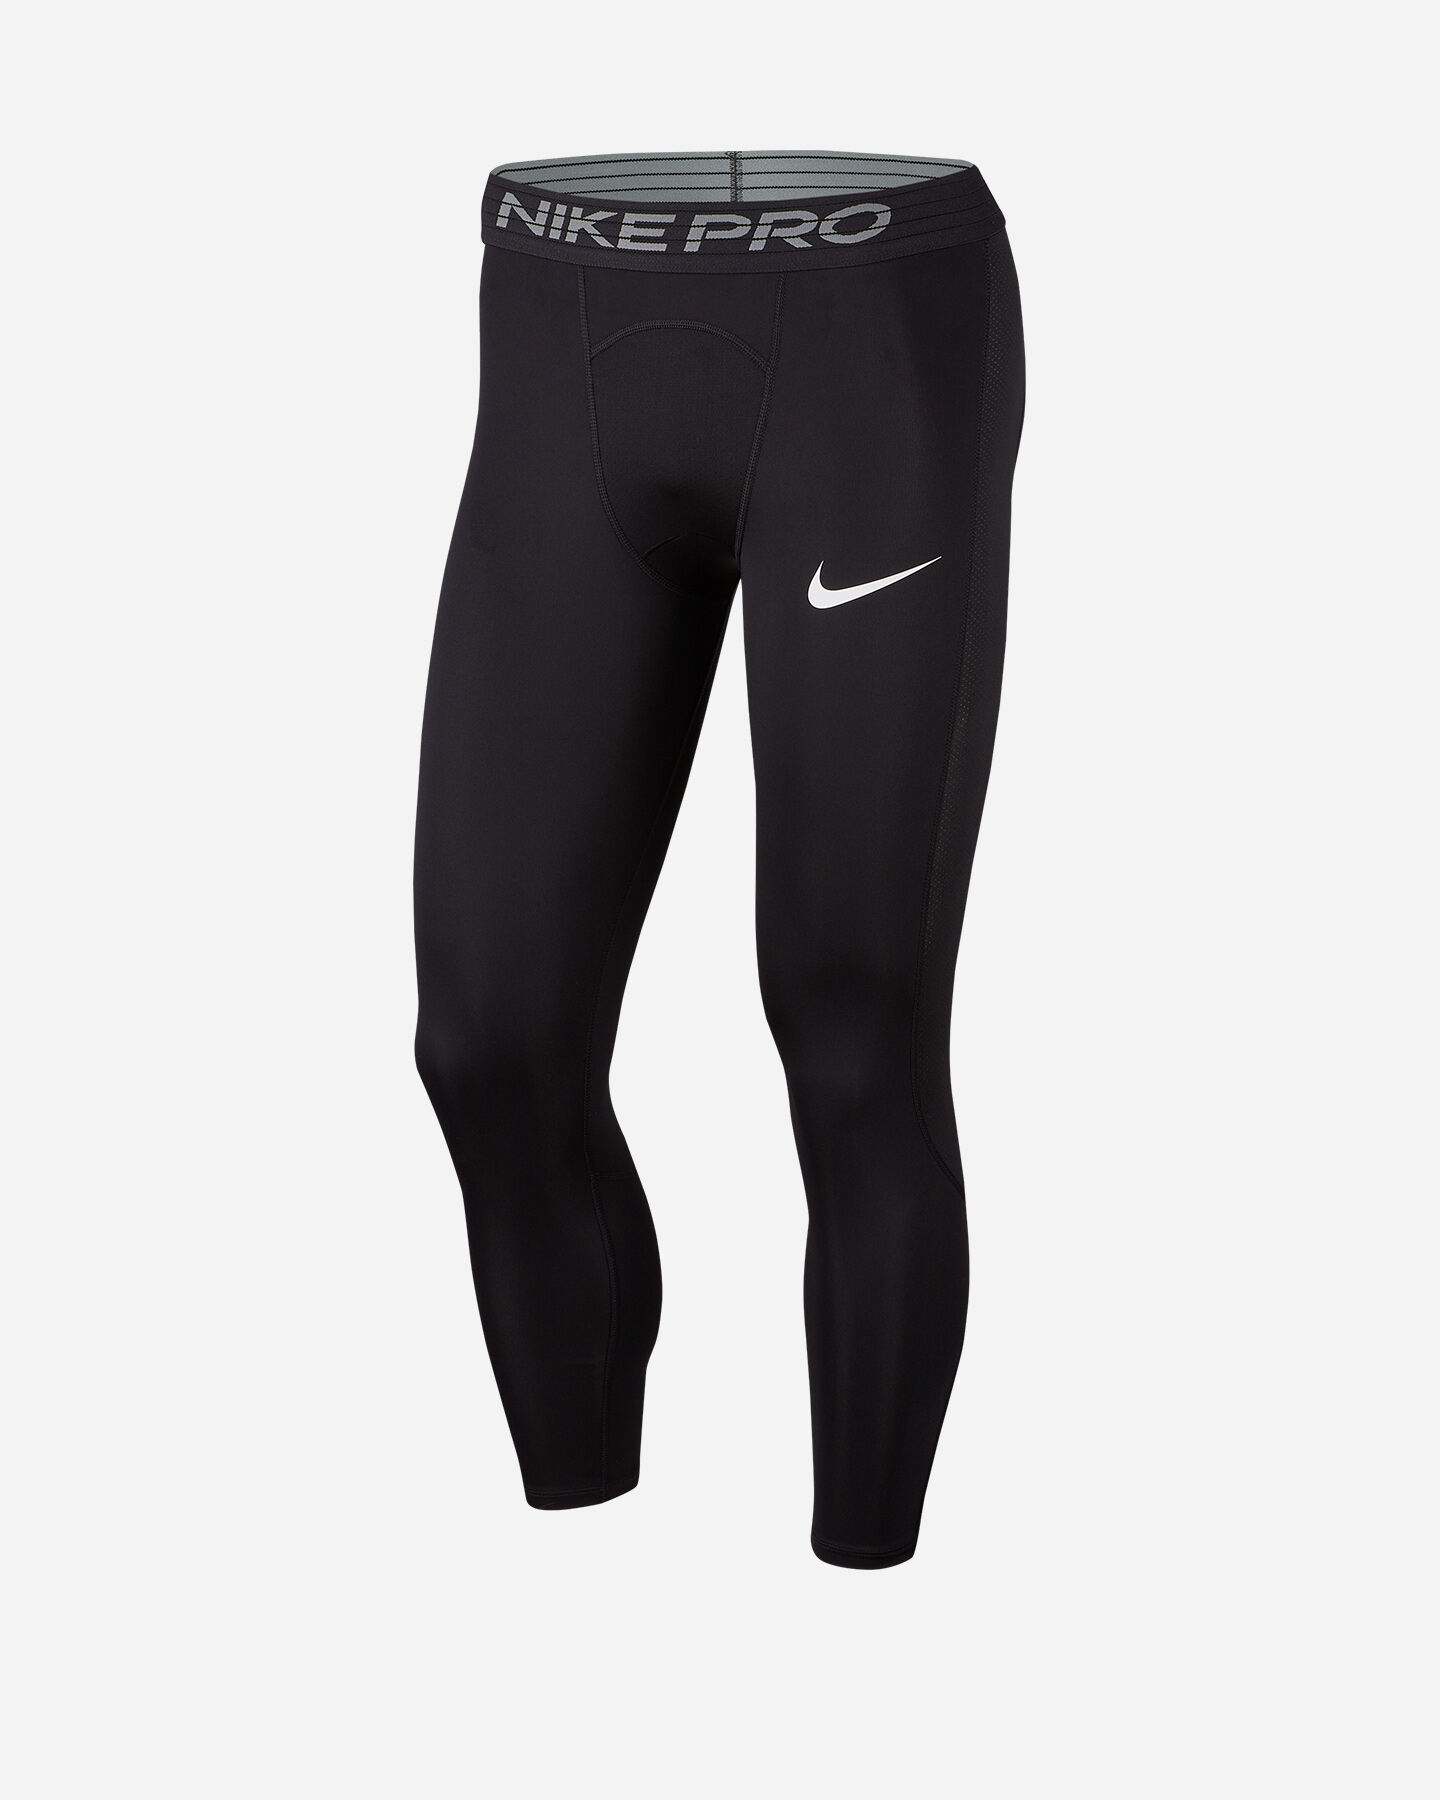  Pantalone training NIKE PRO M S5163150|010|S scatto 4